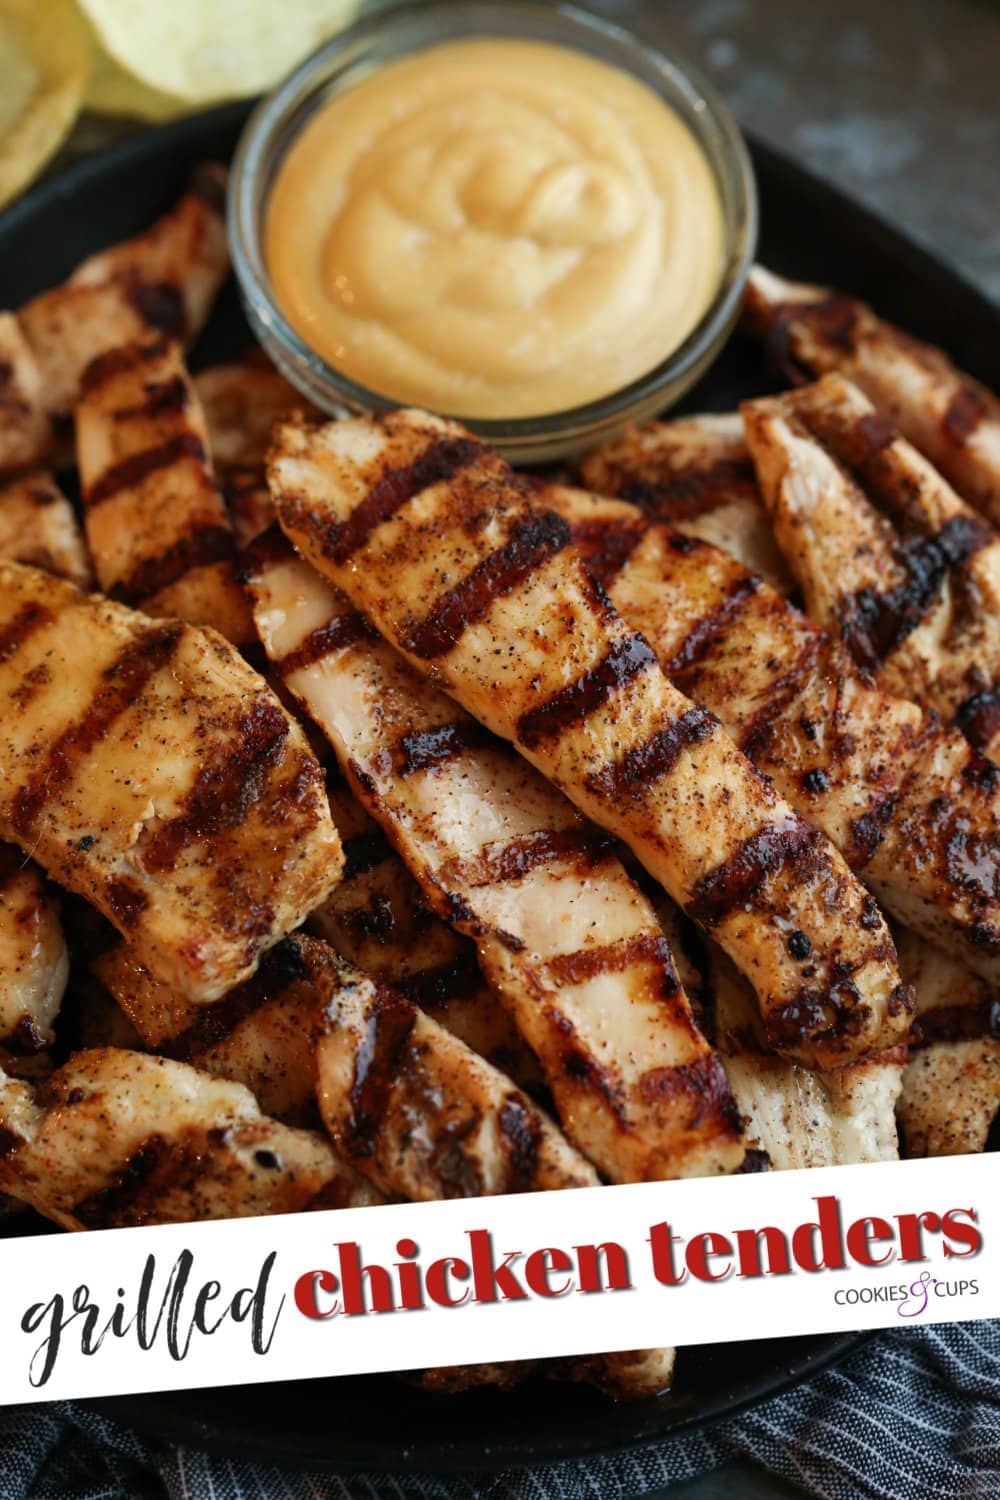 Juicy Grilled Chicken Tenders Recipe | Cookies and Cups